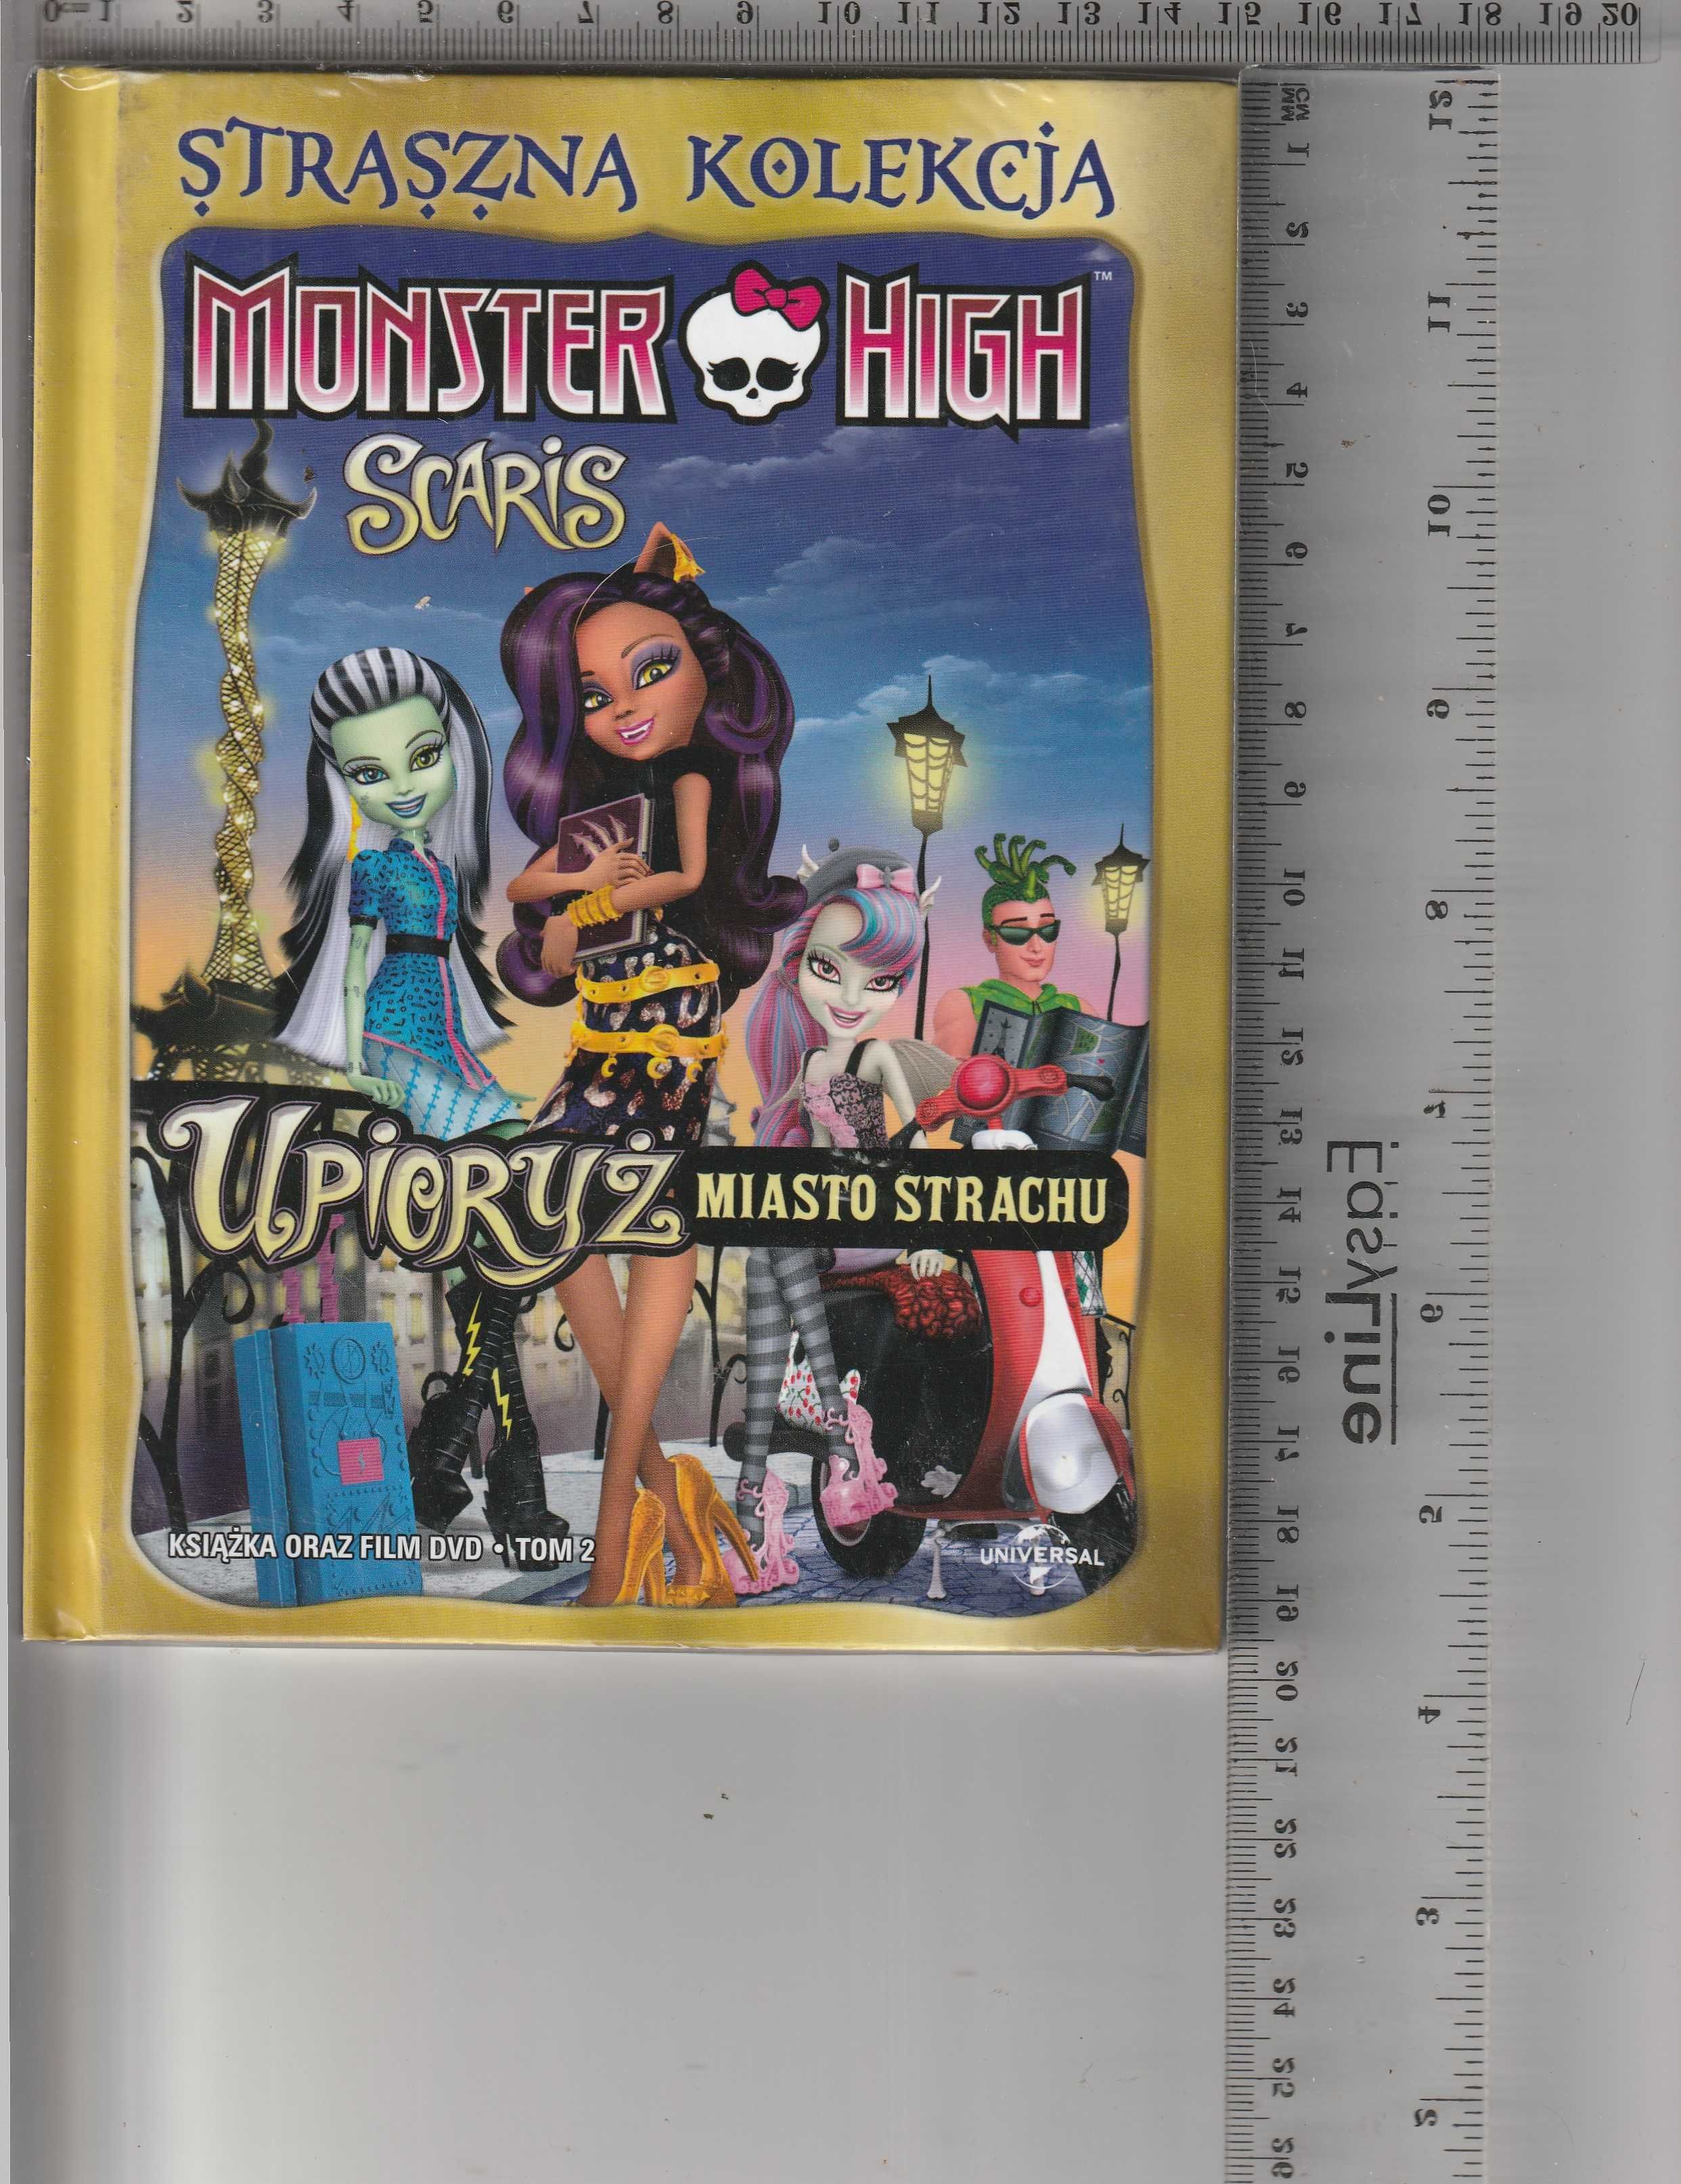 Monster High  Scaris DVD